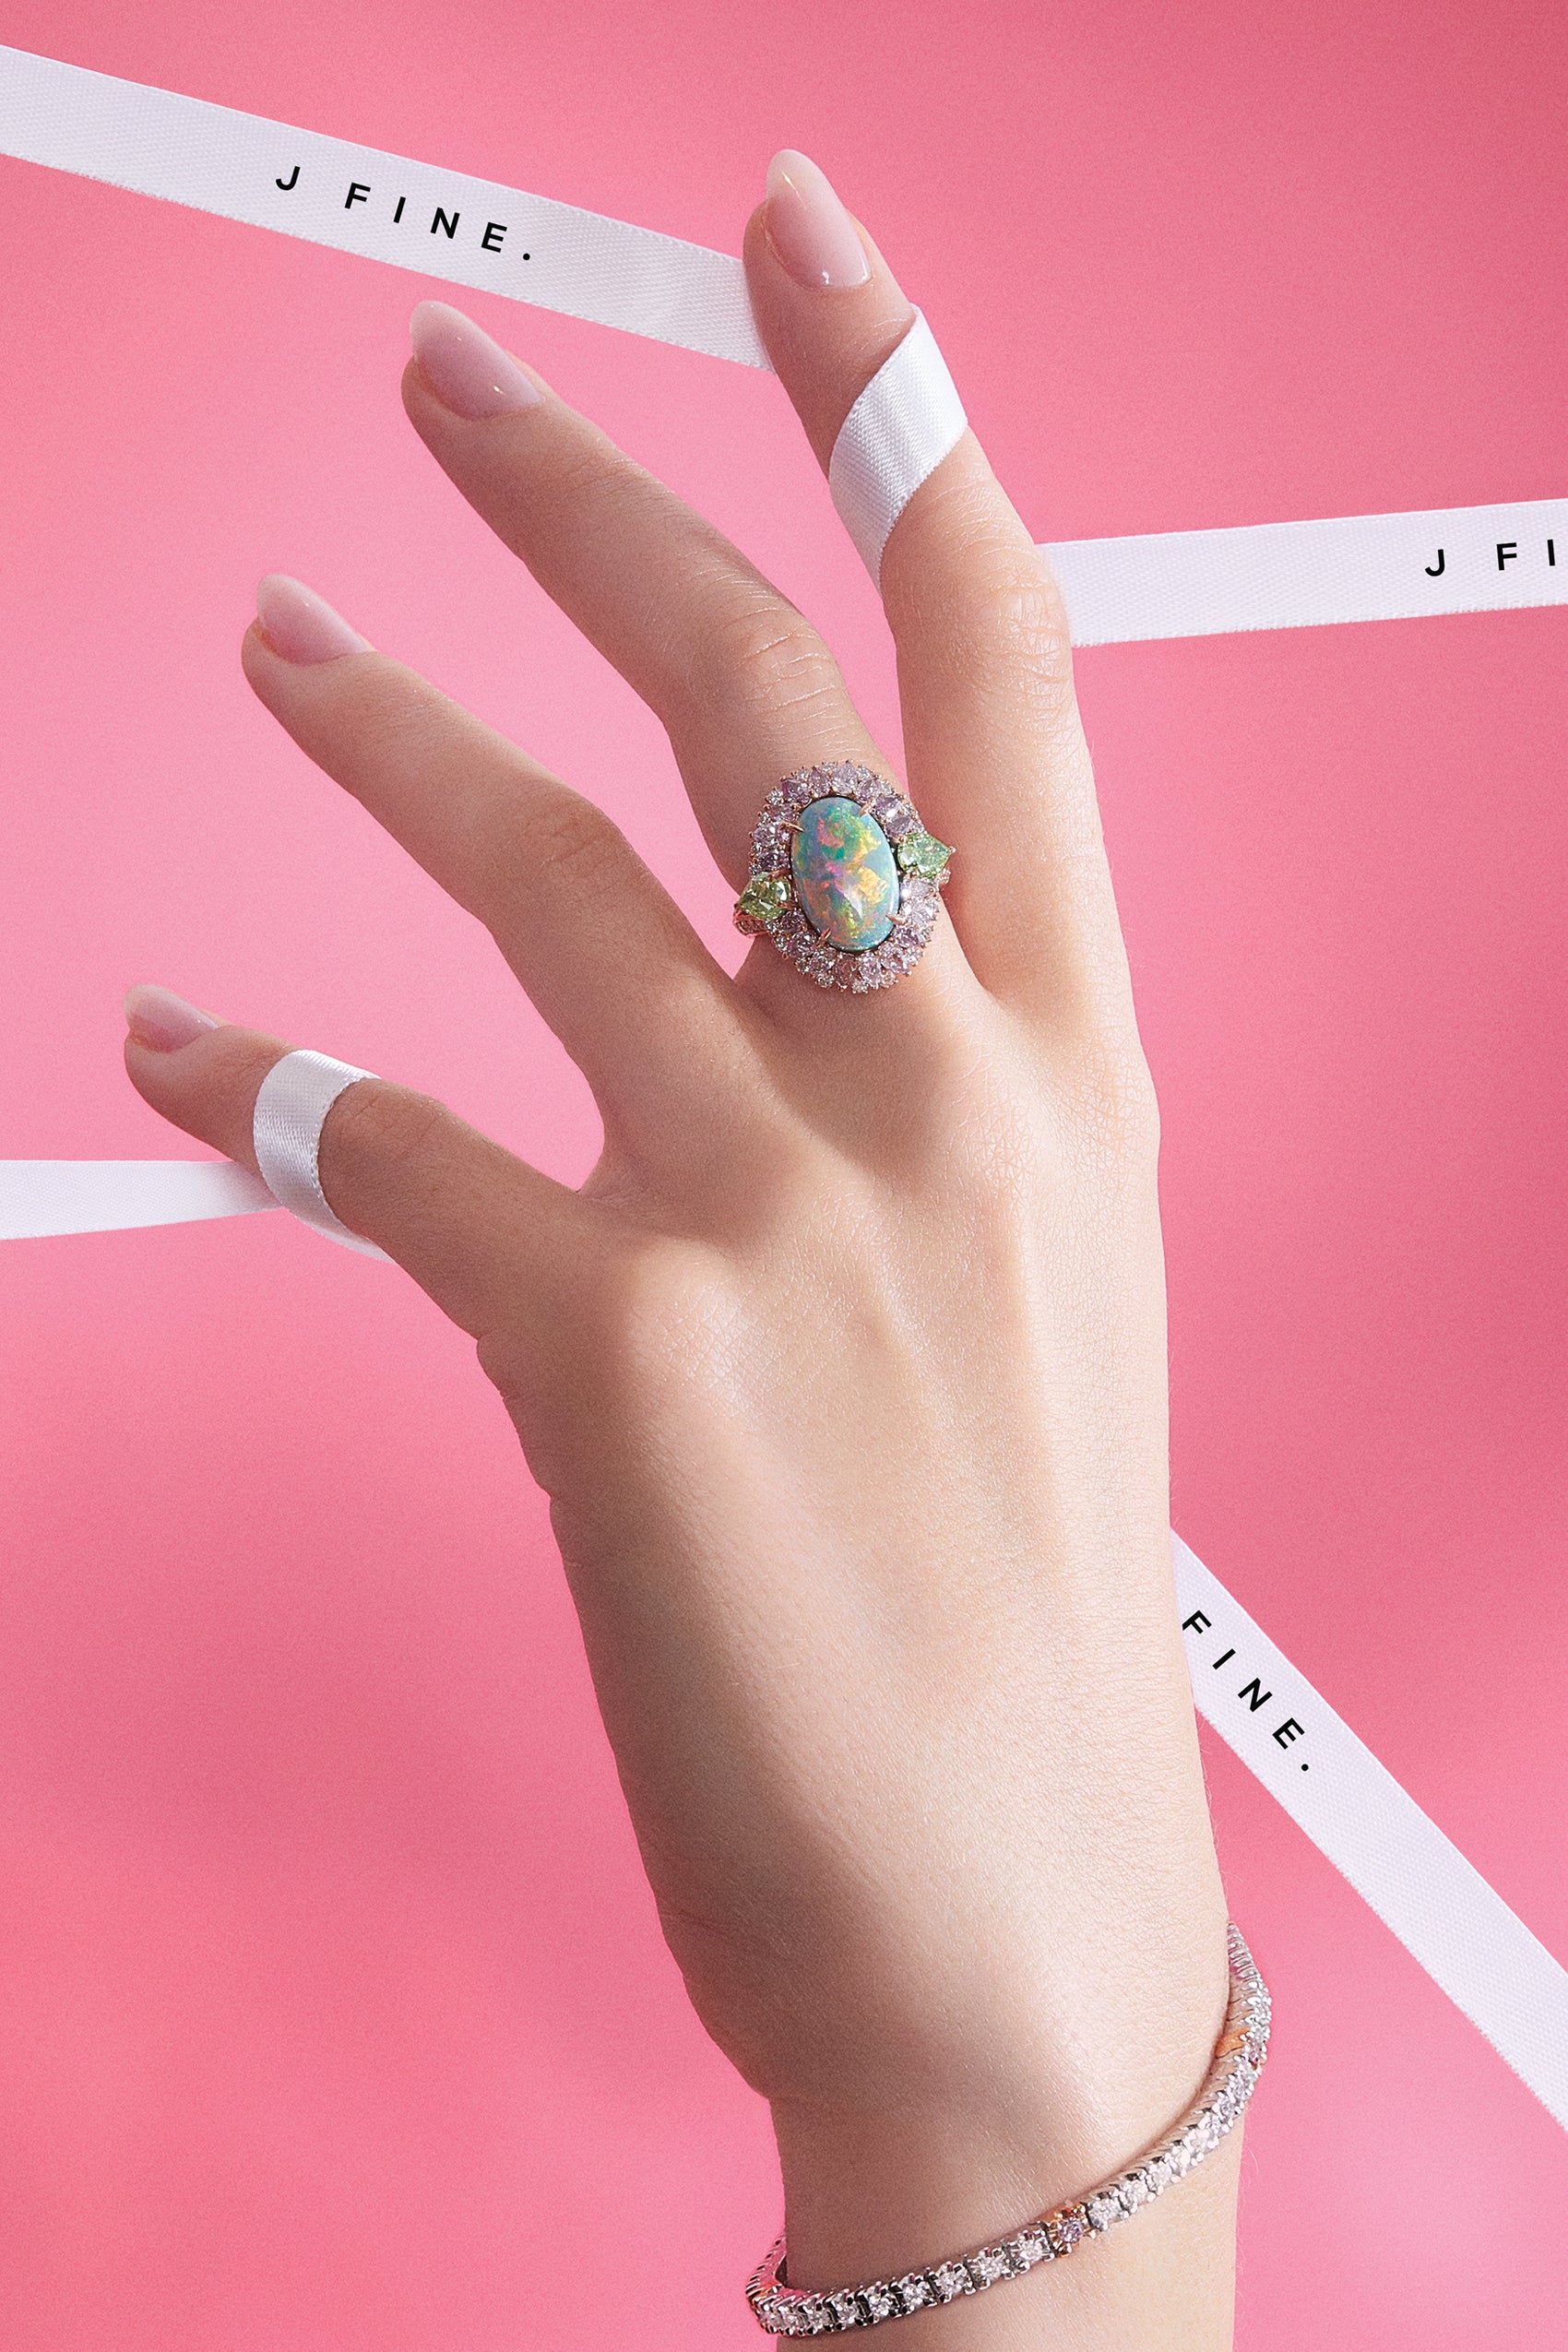 Black Australian Opal Green and Purple Diamond Ring - Pink Diamonds, J FINE - J Fine, Rings - Pink Diamond Jewelry, black-australian-opal-ring-by-j-fine - Argyle Pink Diamonds